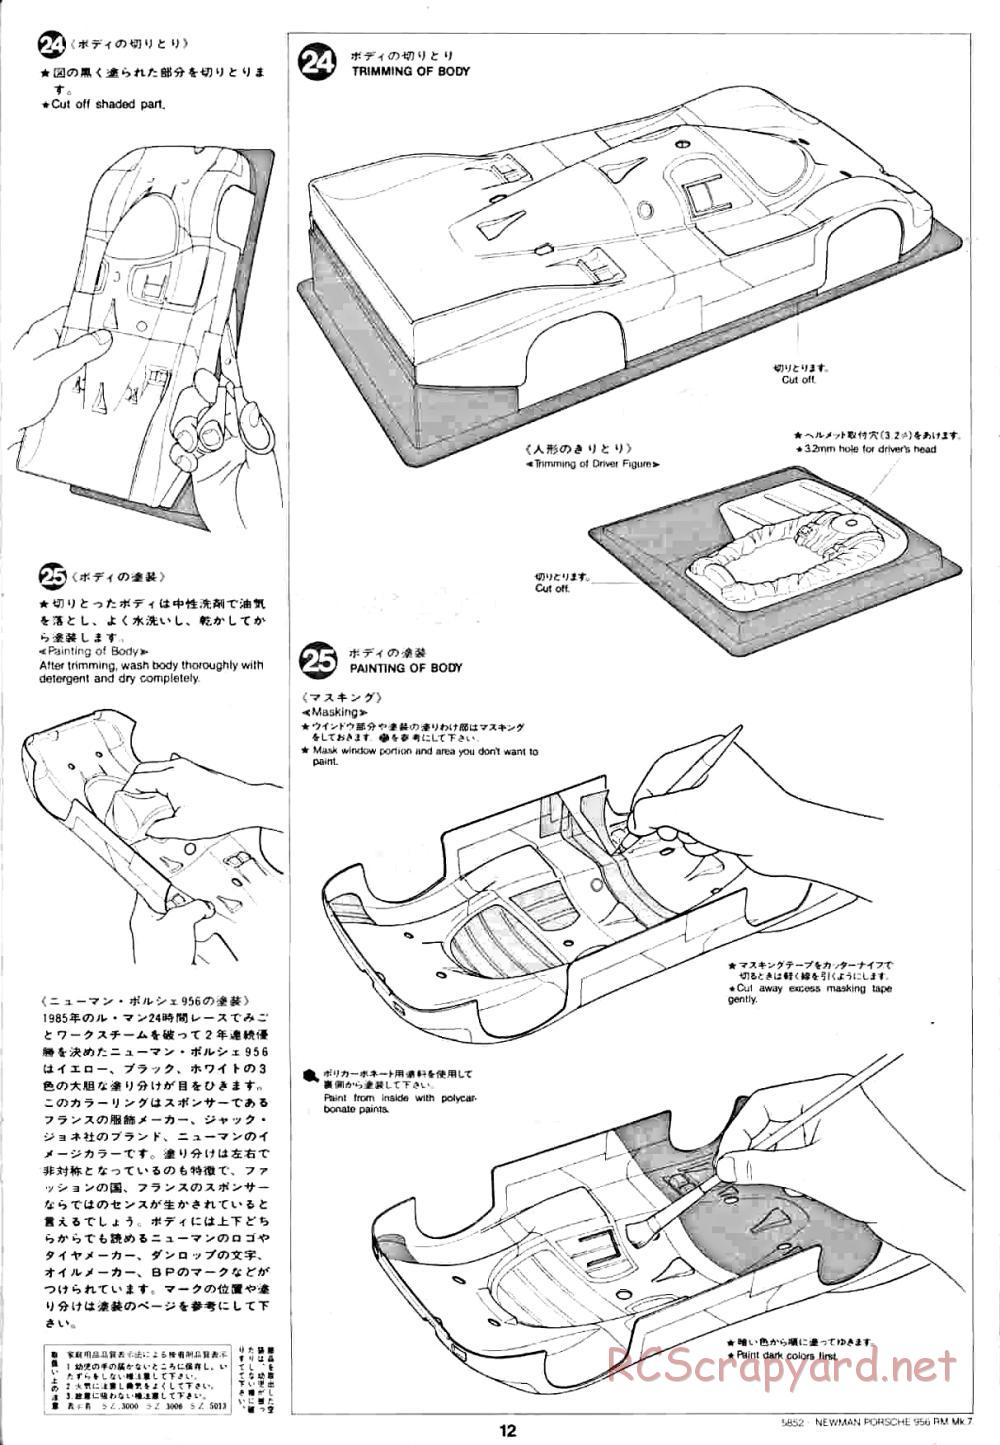 Tamiya - Newman Prsch 956 - RM MK.7 - 58052 - Manual - Page 12